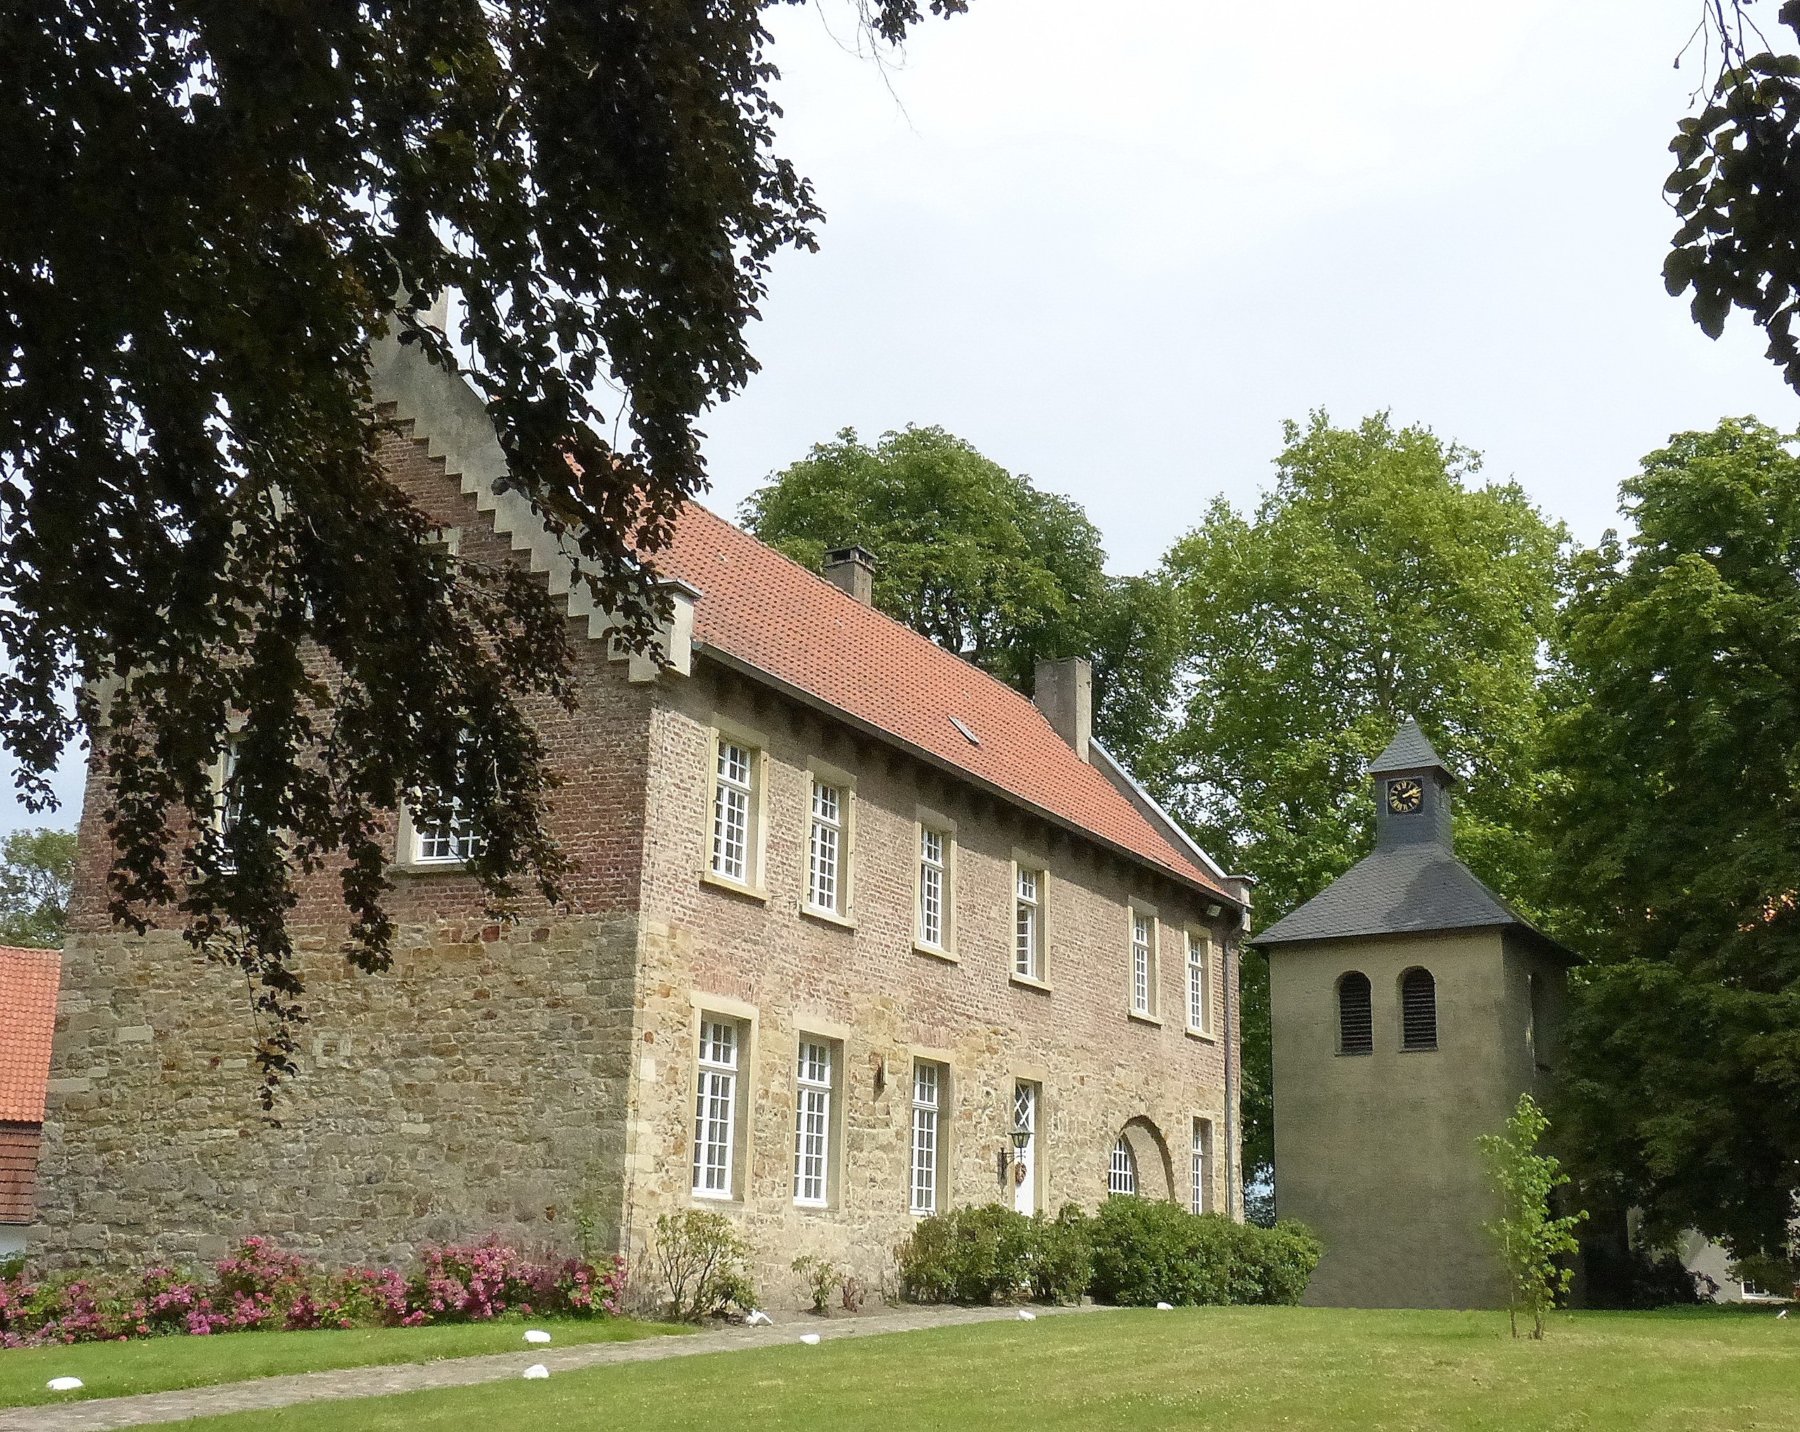 Schloss Cappenberg – Altes Pastorat mit Glockenturm